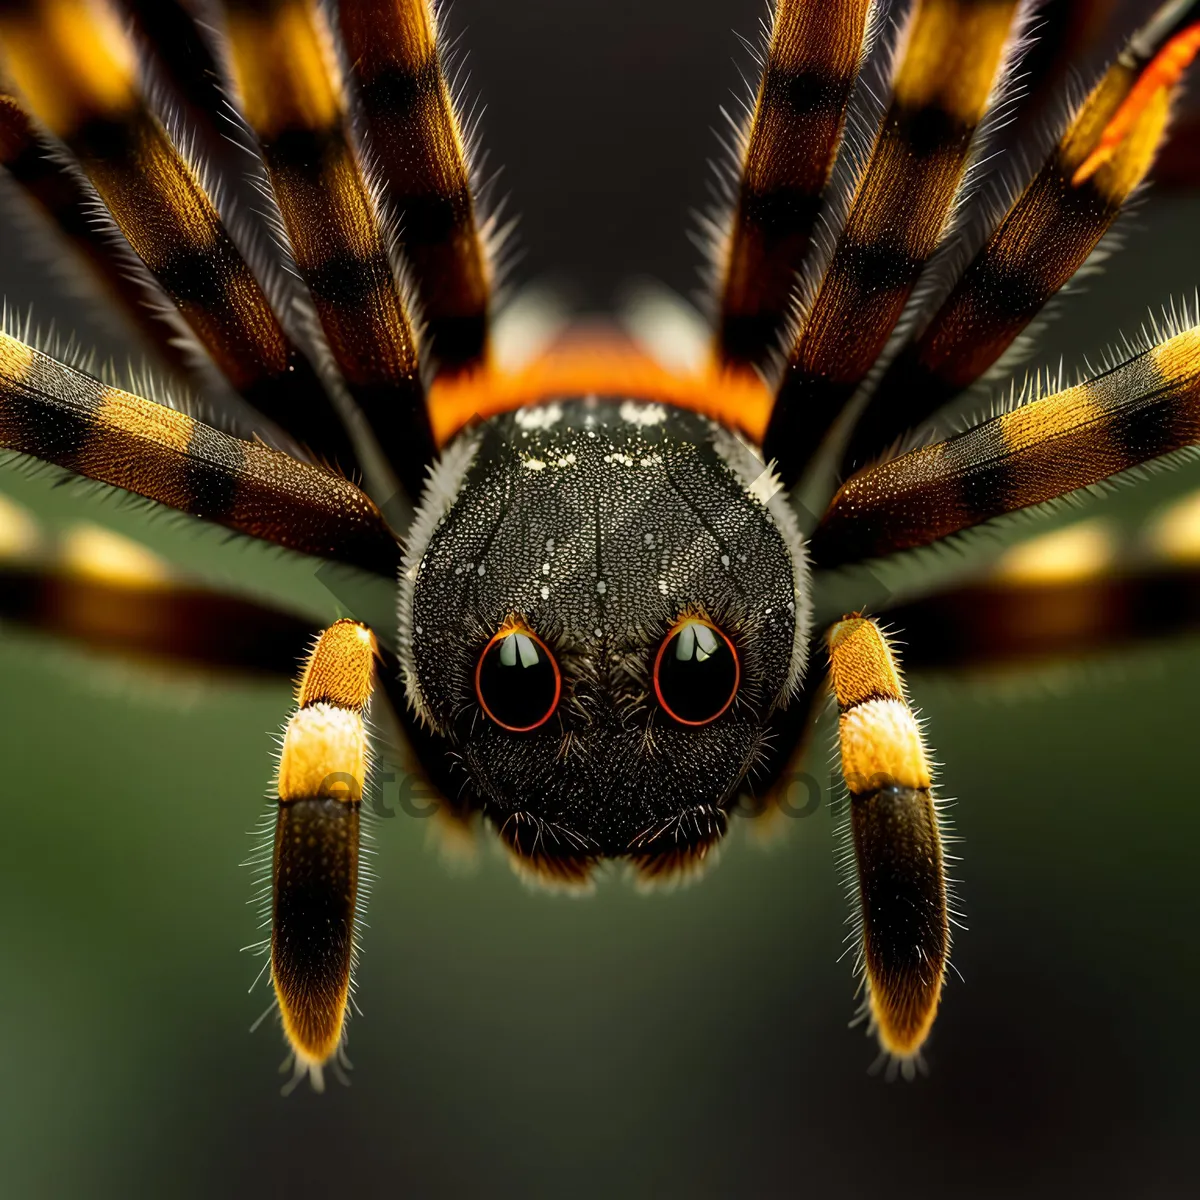 Picture of Vibrant Winged Arachnid Capturing Prey